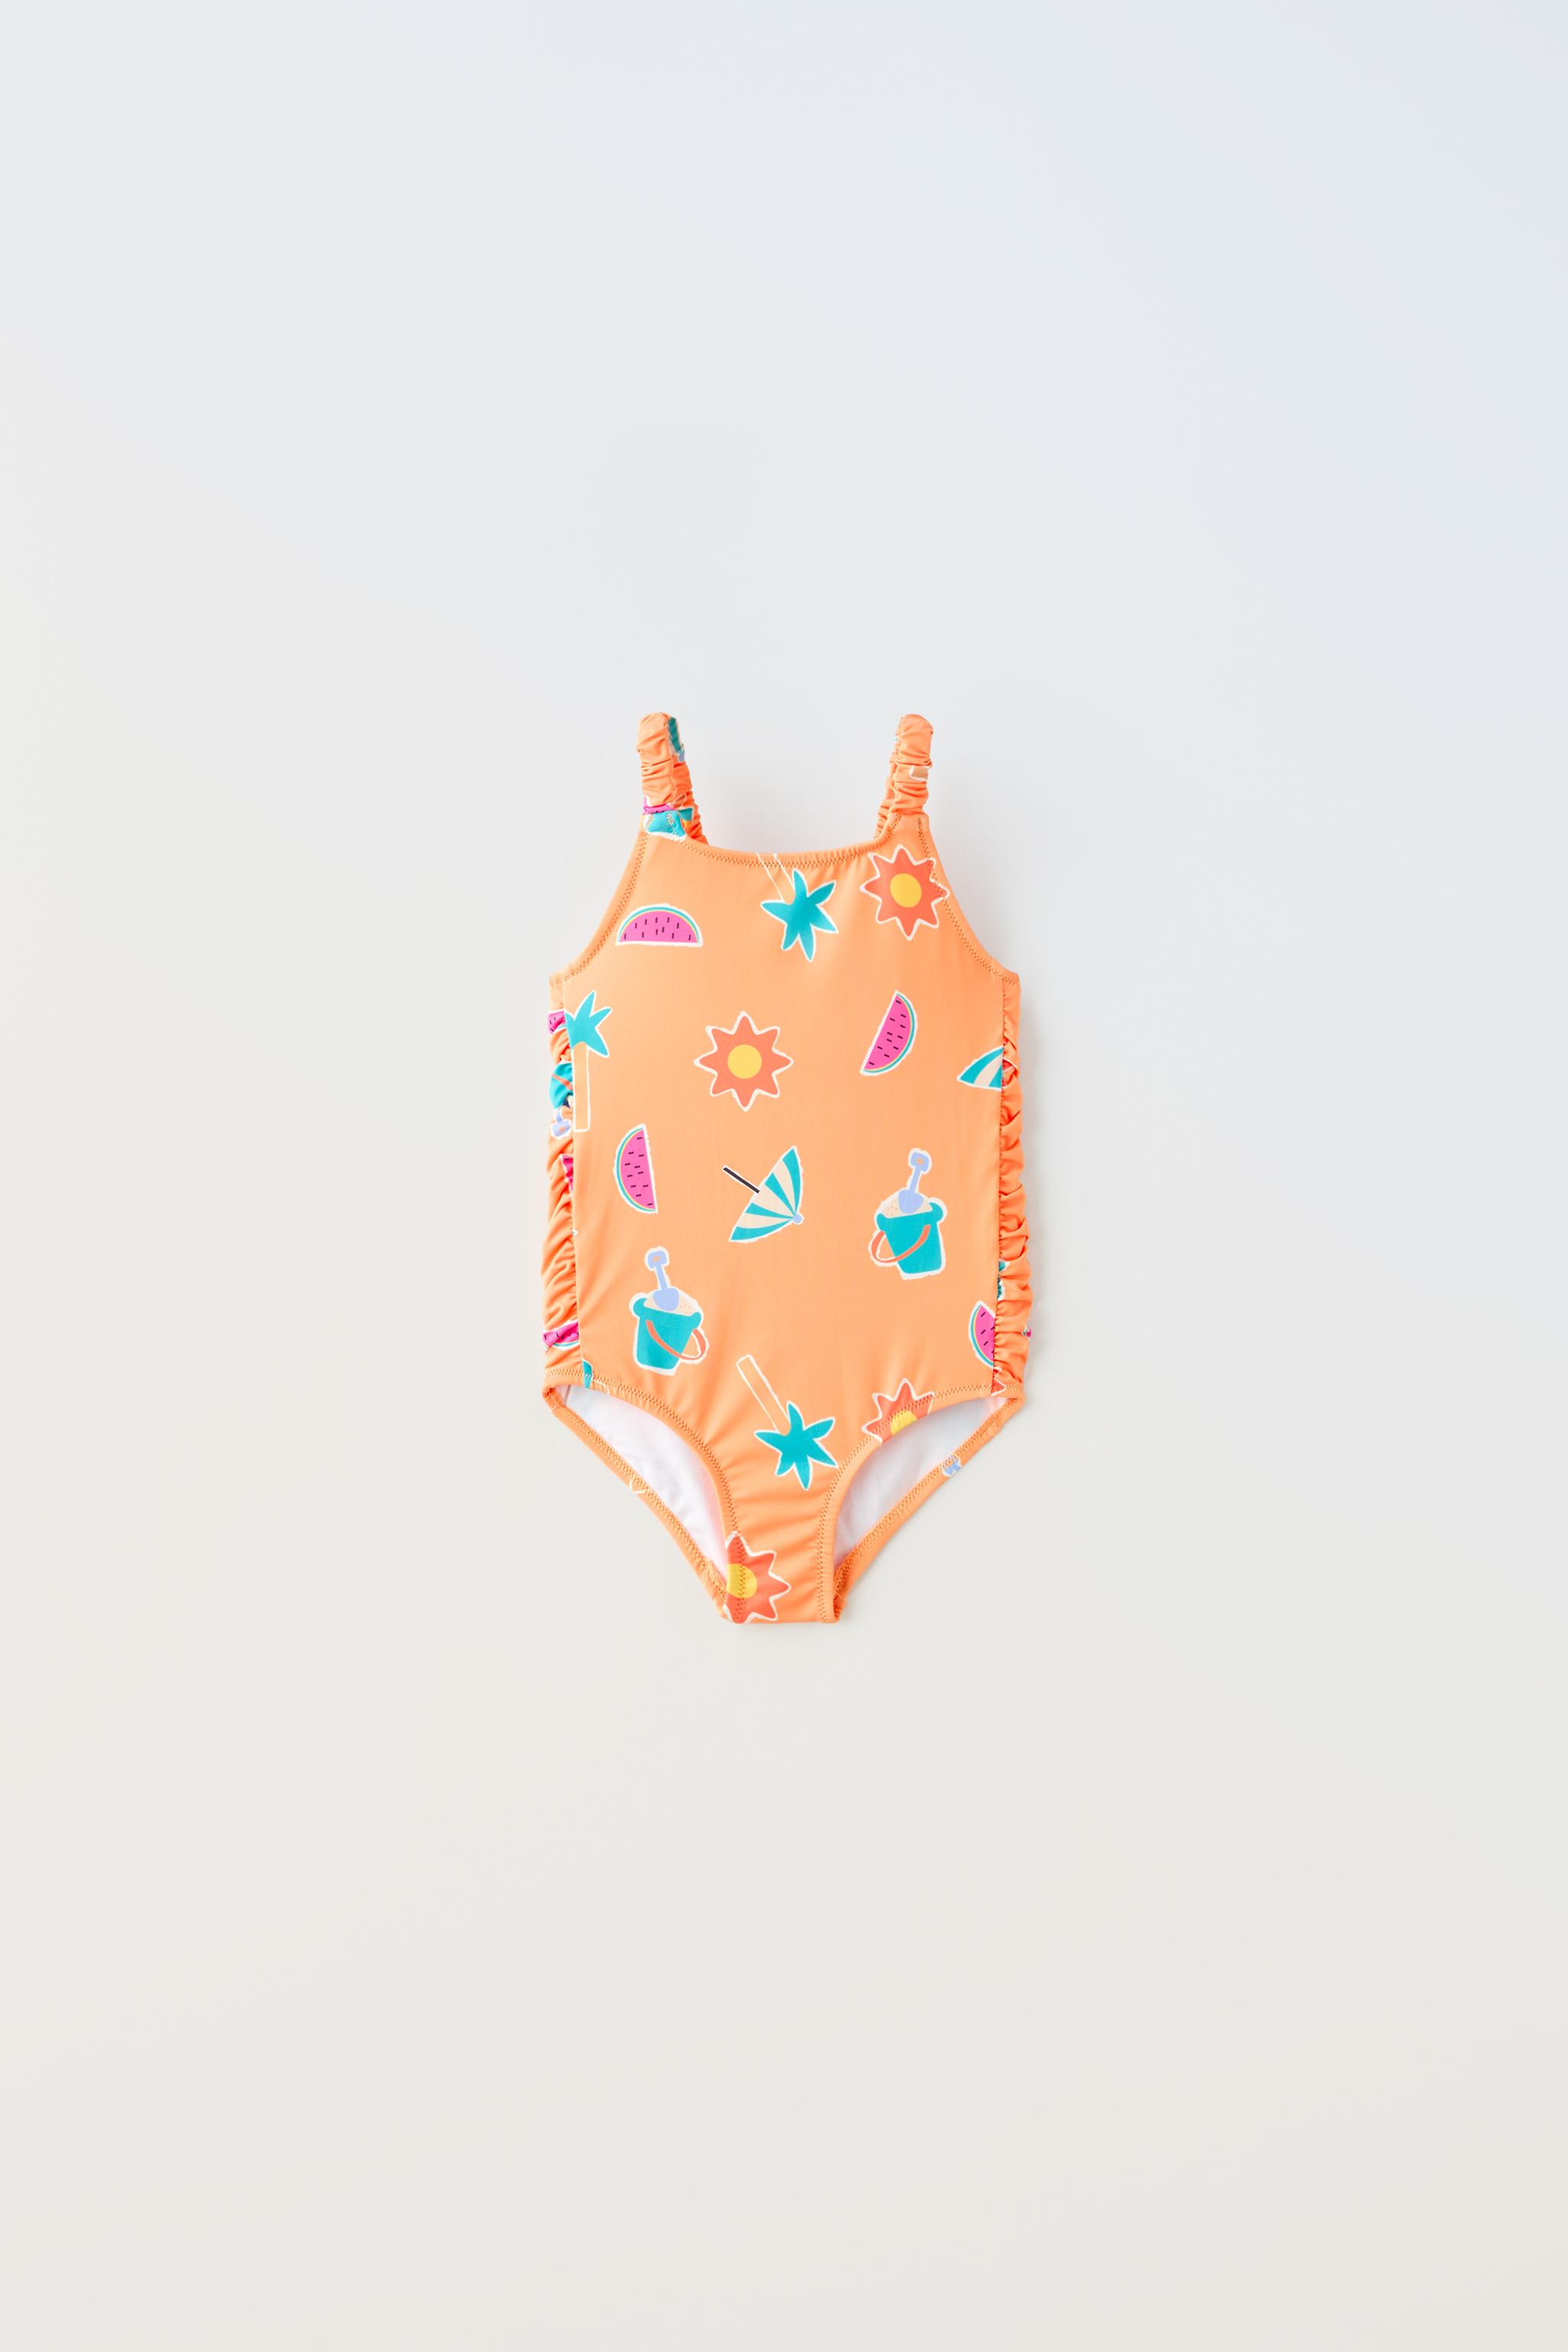 ZARA Girls Tropical Floral Coral ORange Yellow Pink Bikini Swim suit 7 8 9  SWet